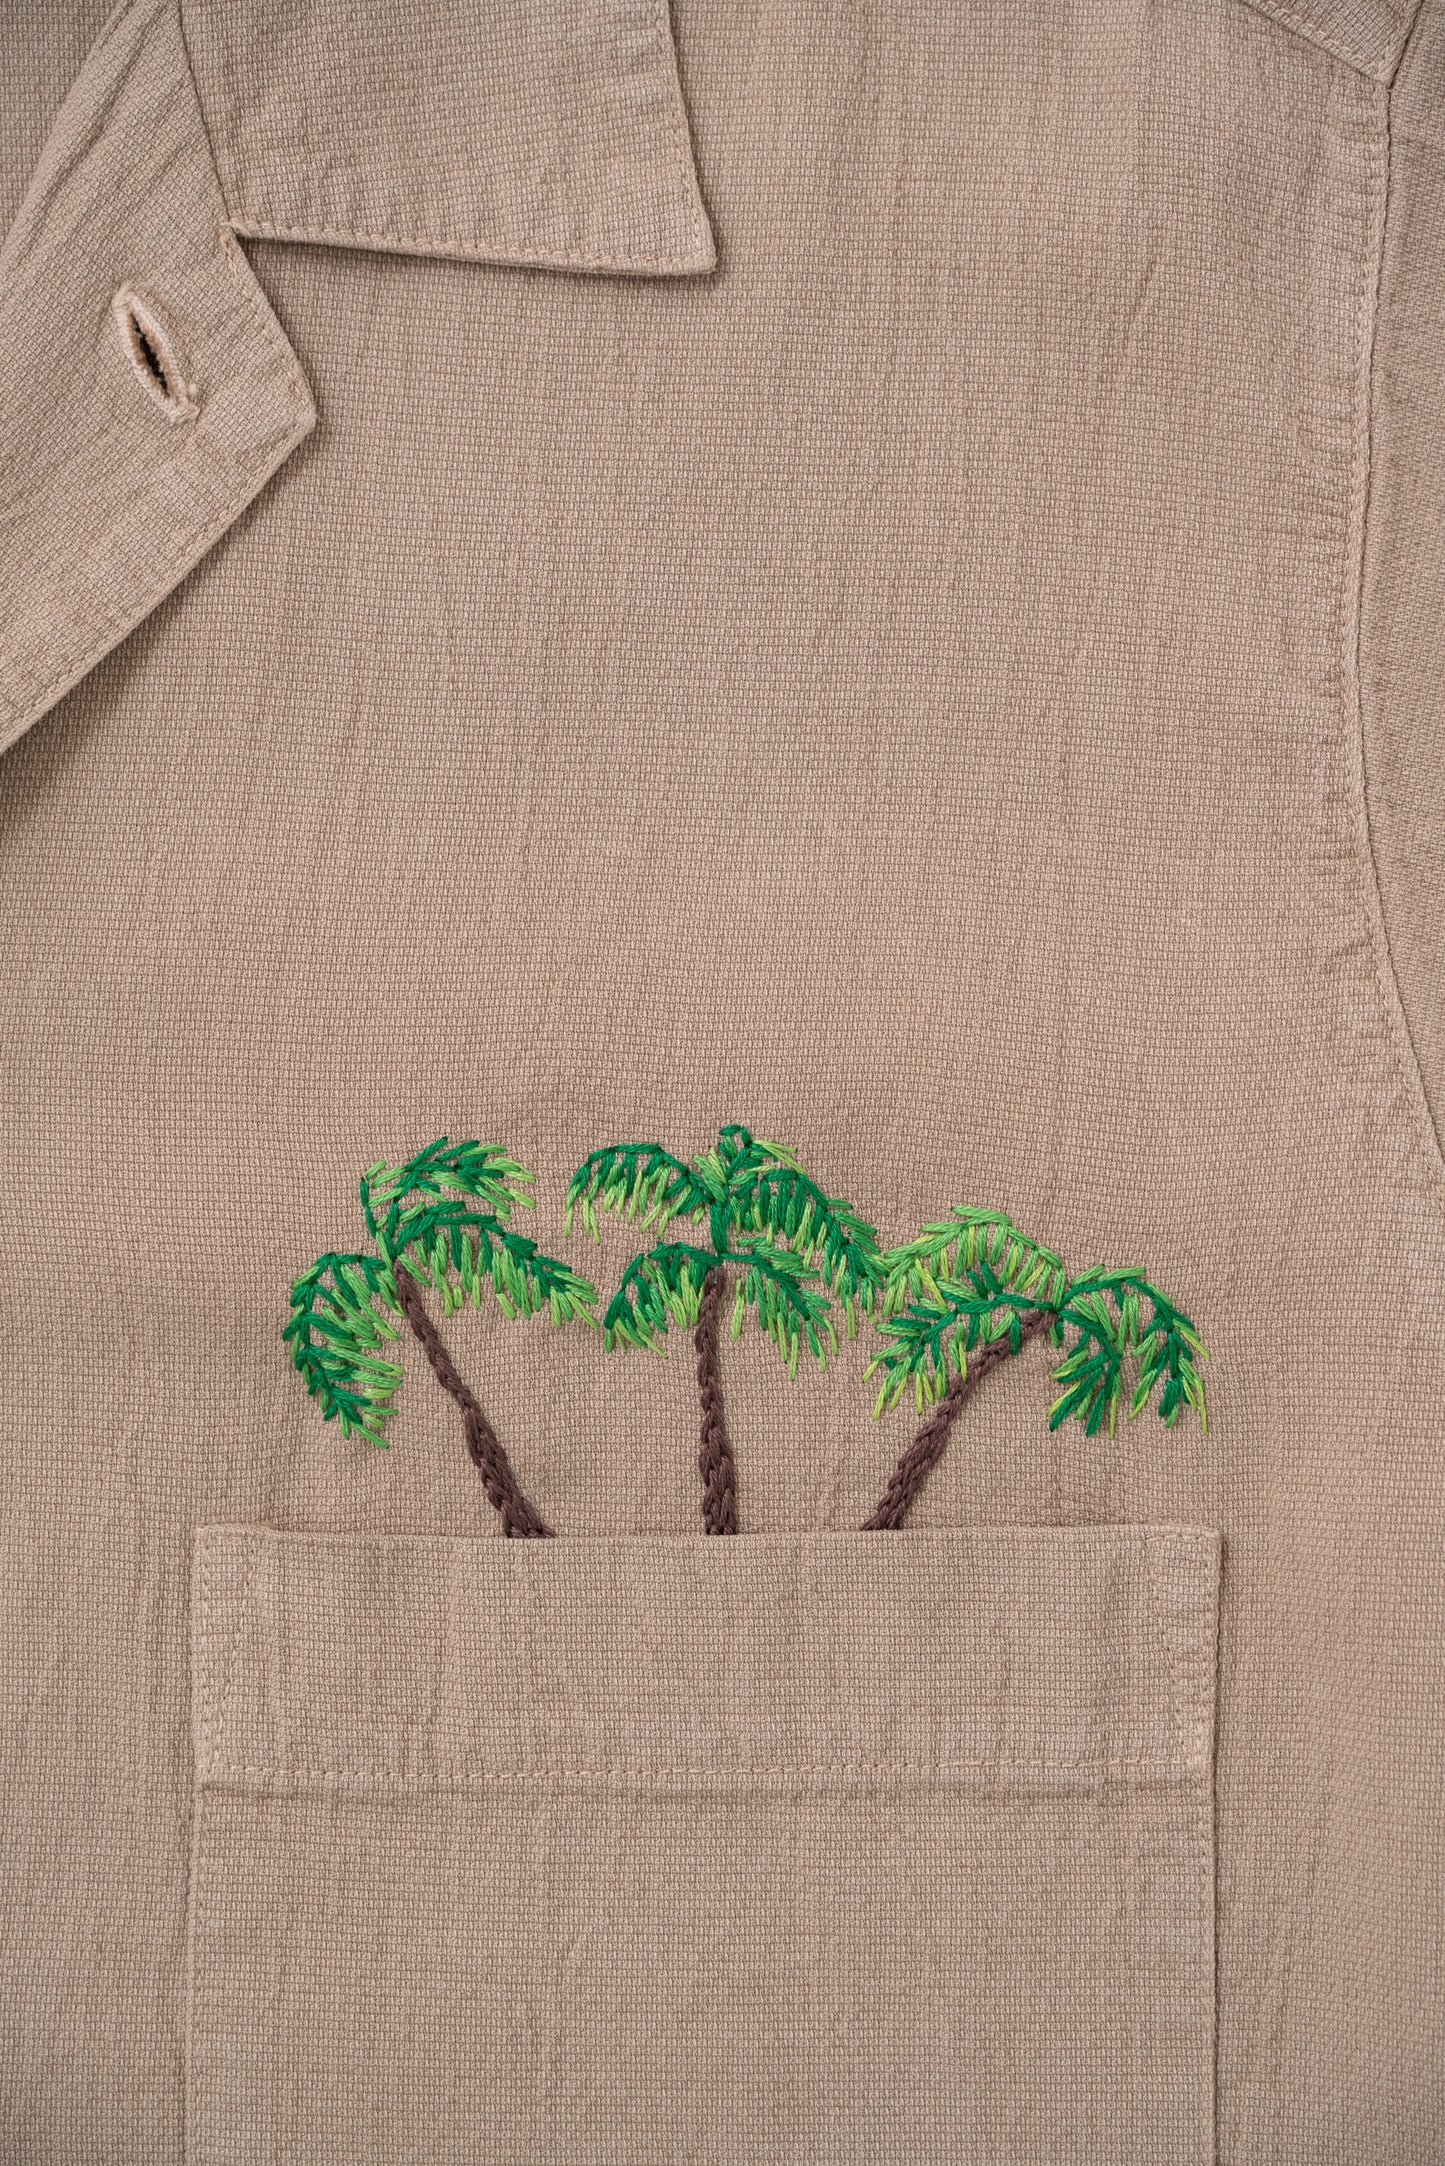 Crinkle S/S Shirt - Pocket Palm